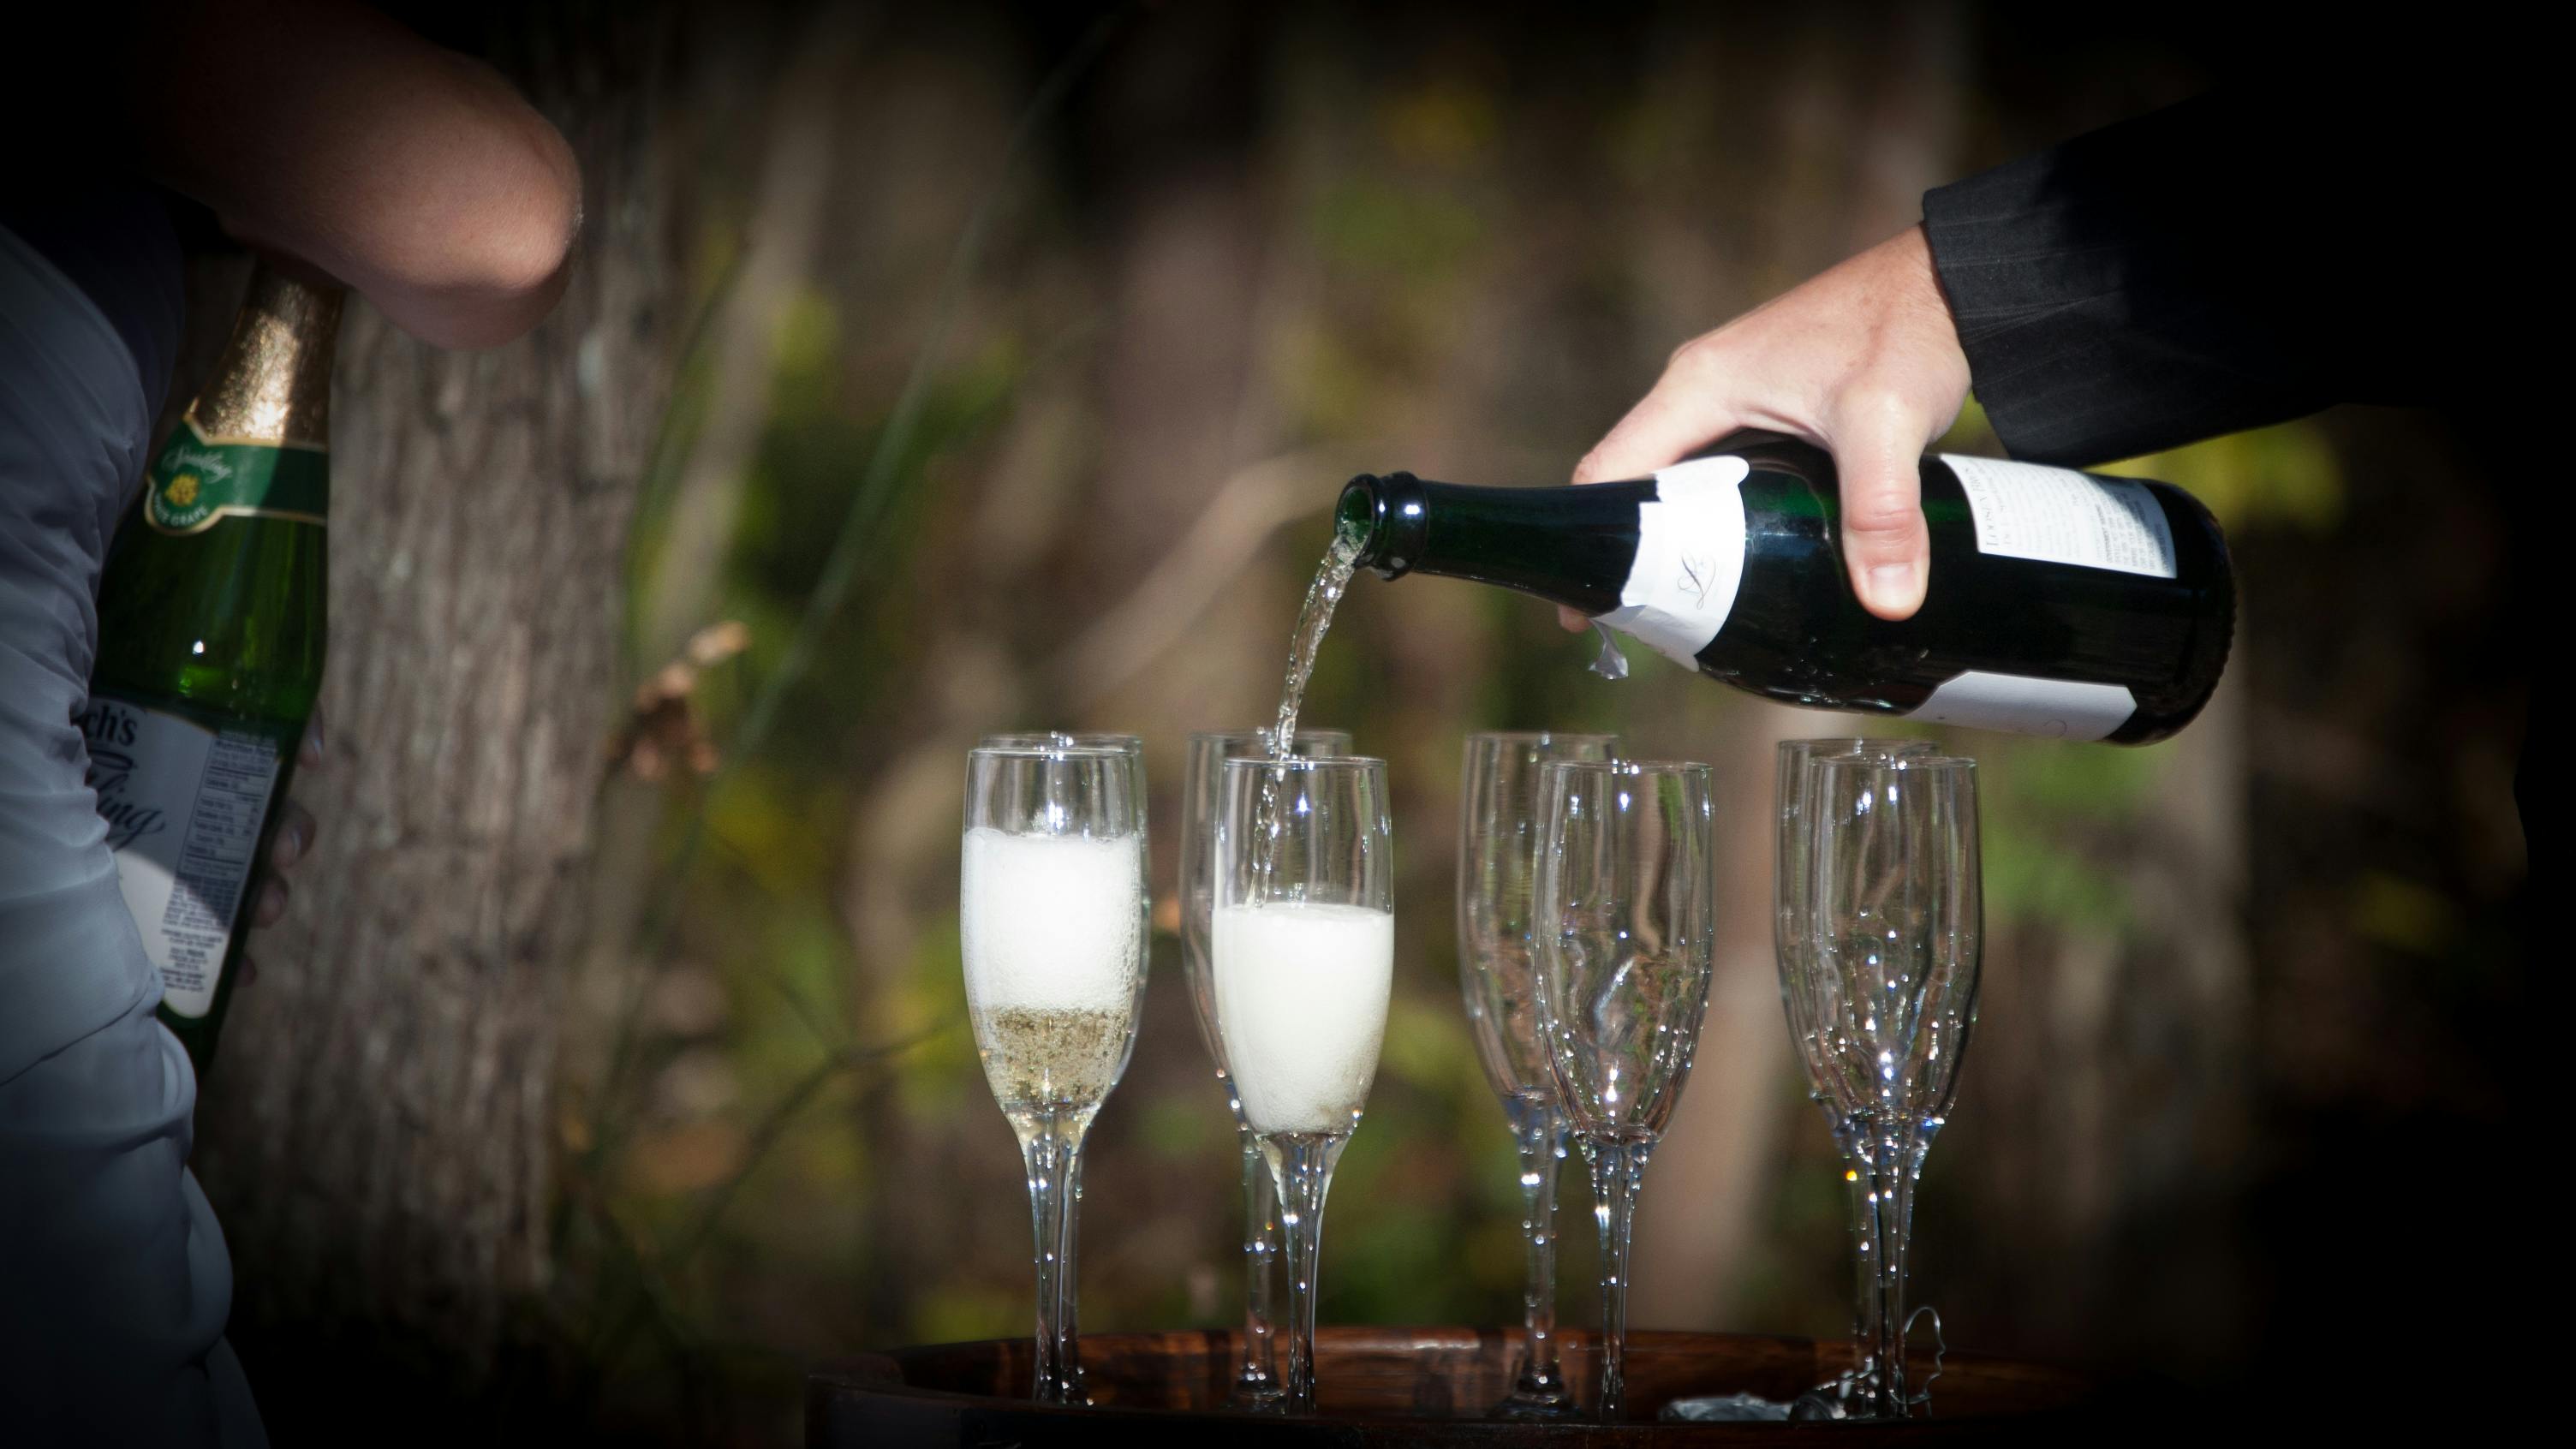 Free stock photo of champagne glasses, wedding